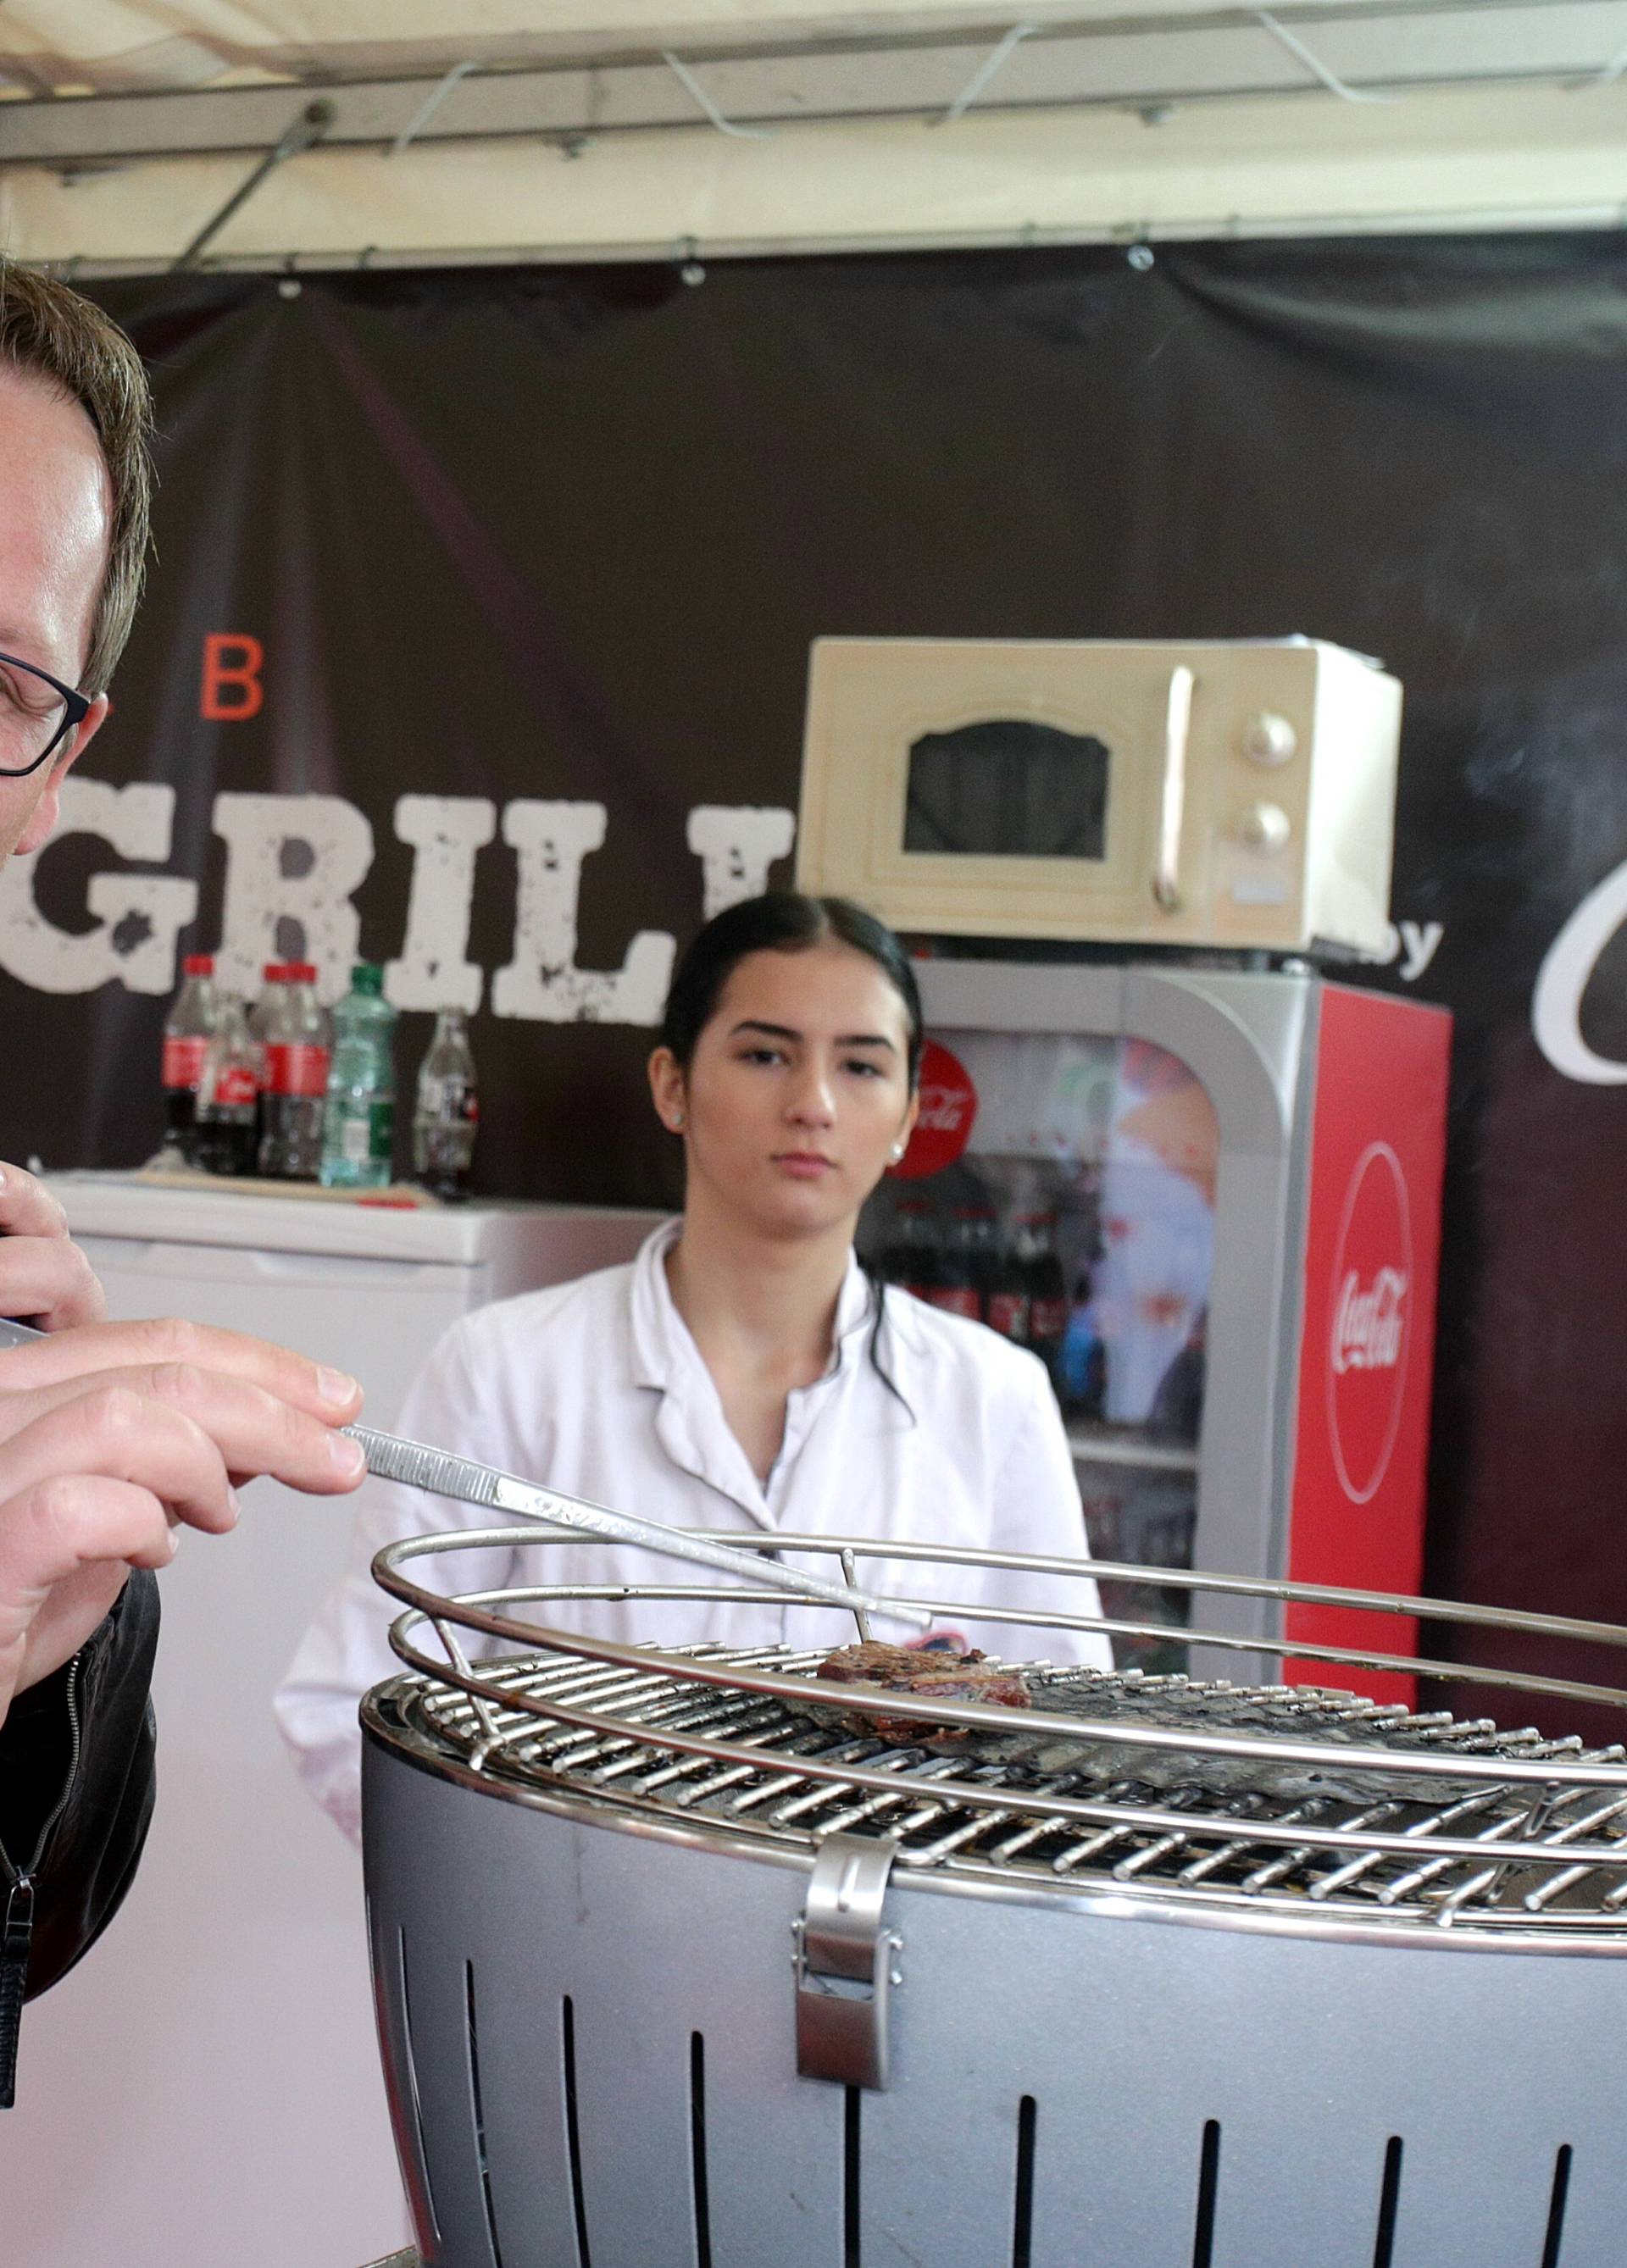 Chef David Skoko "zapalio" je današnji Chill&Grill festival!